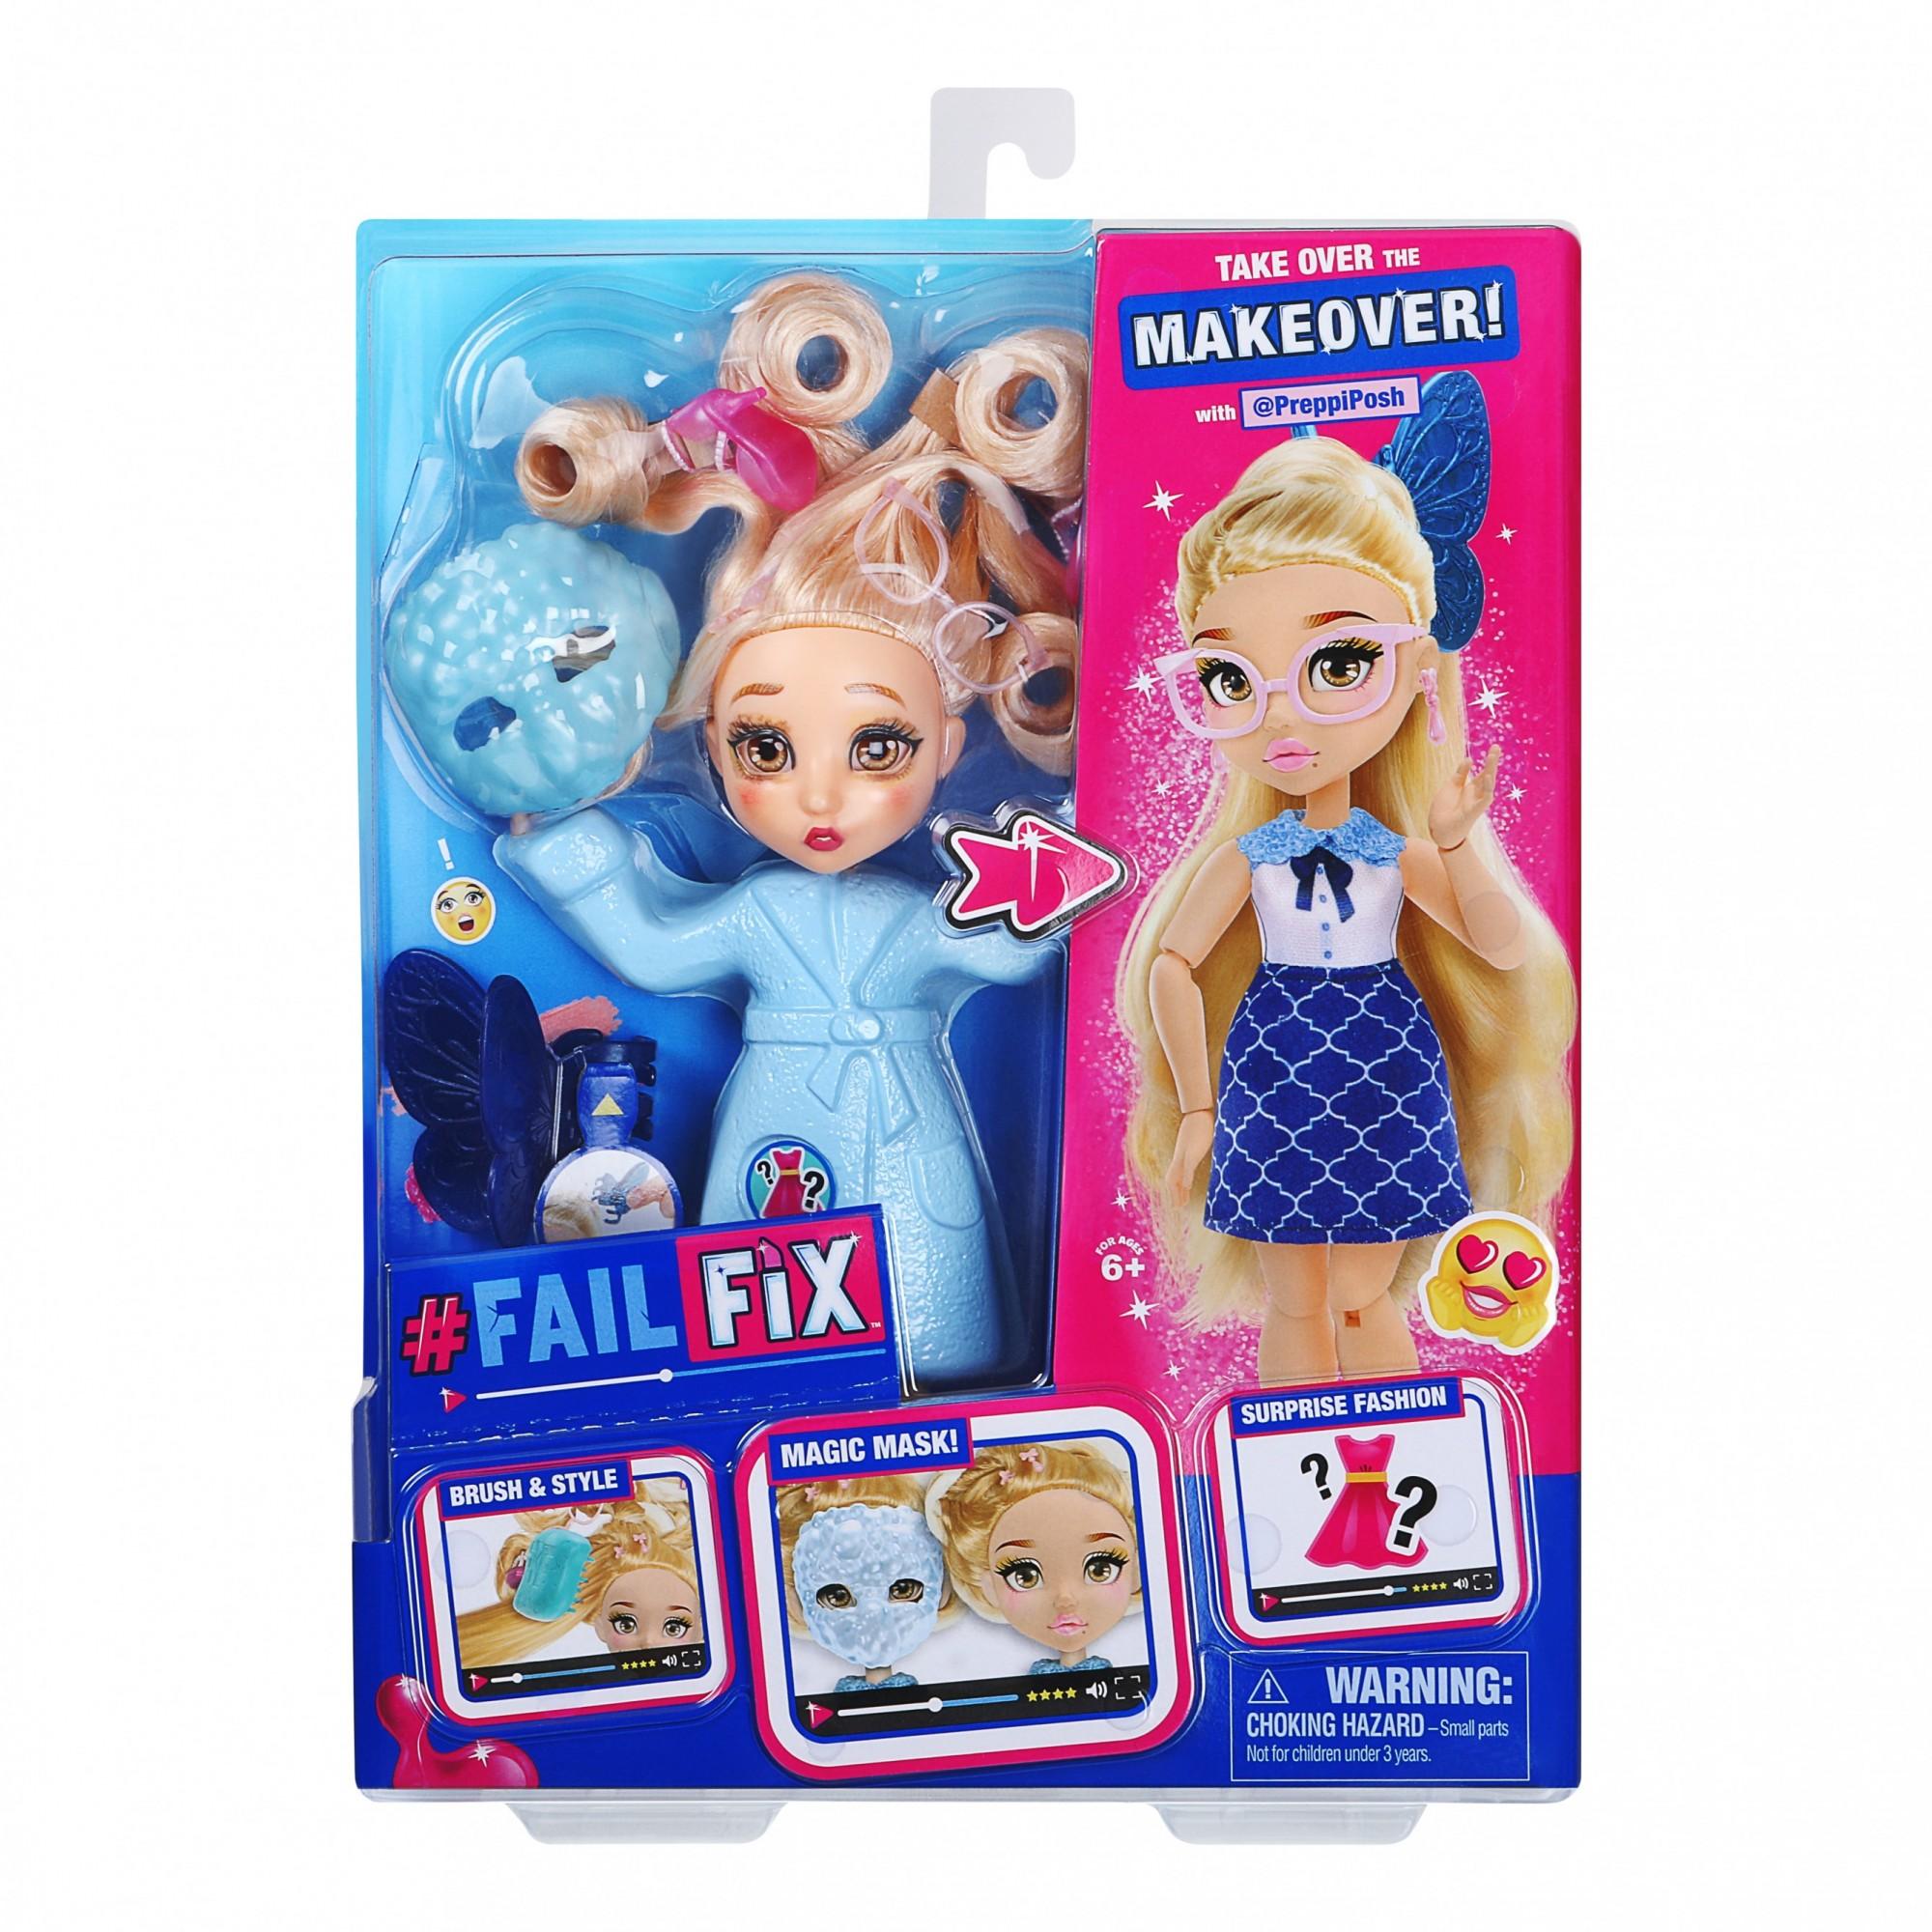 FailFix - Preppi.Posh Total Makeover Doll Pack - 8.5" inch Fashion Doll, Girls 6+ - image 3 of 12